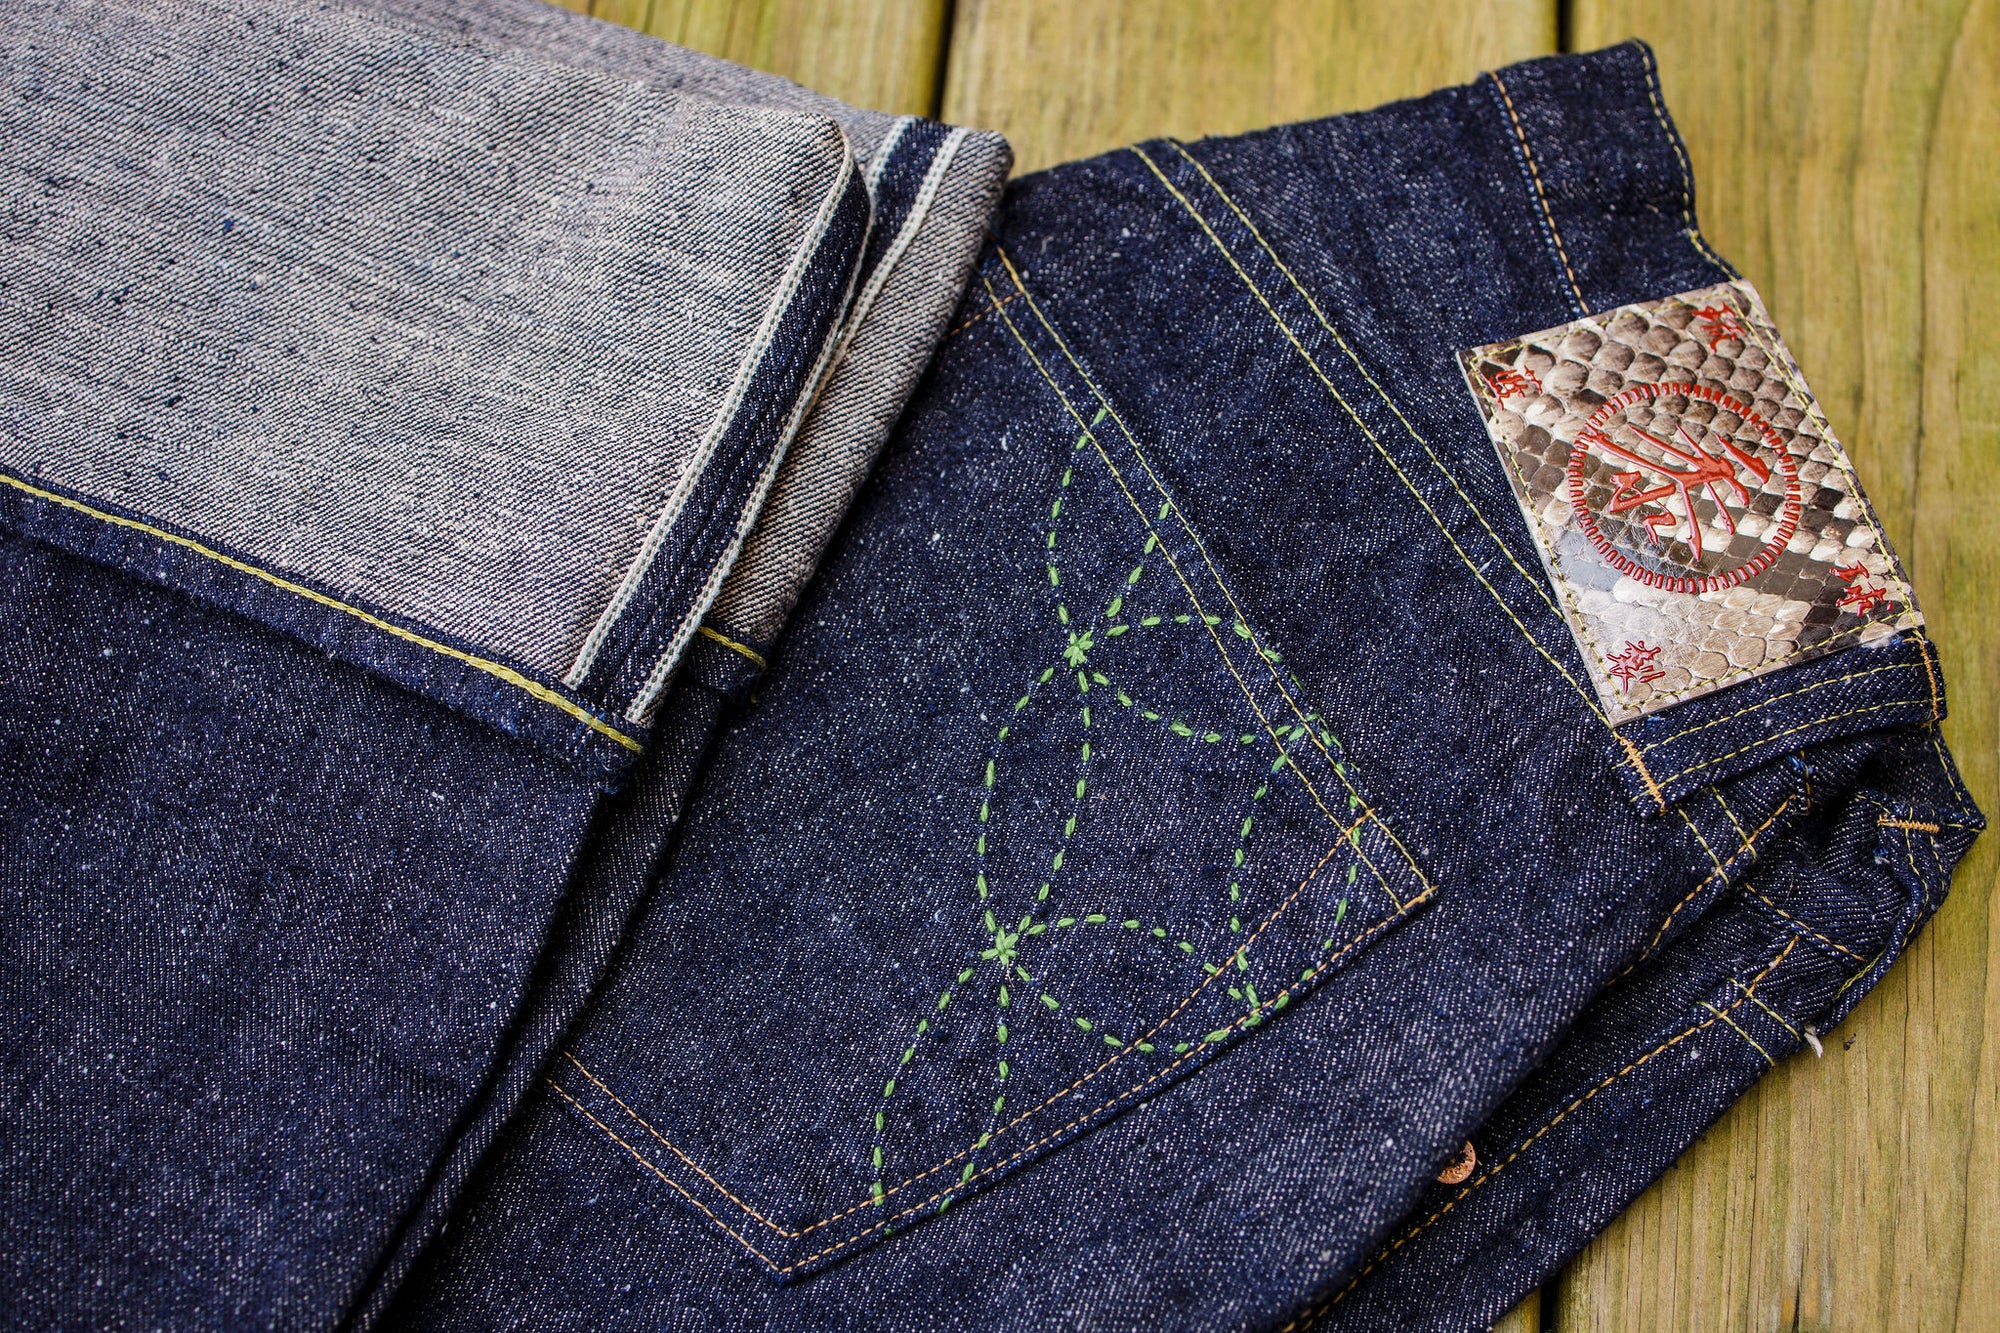 Sugar Cane 14,25oz Okinawa Jeans – Regular Straight